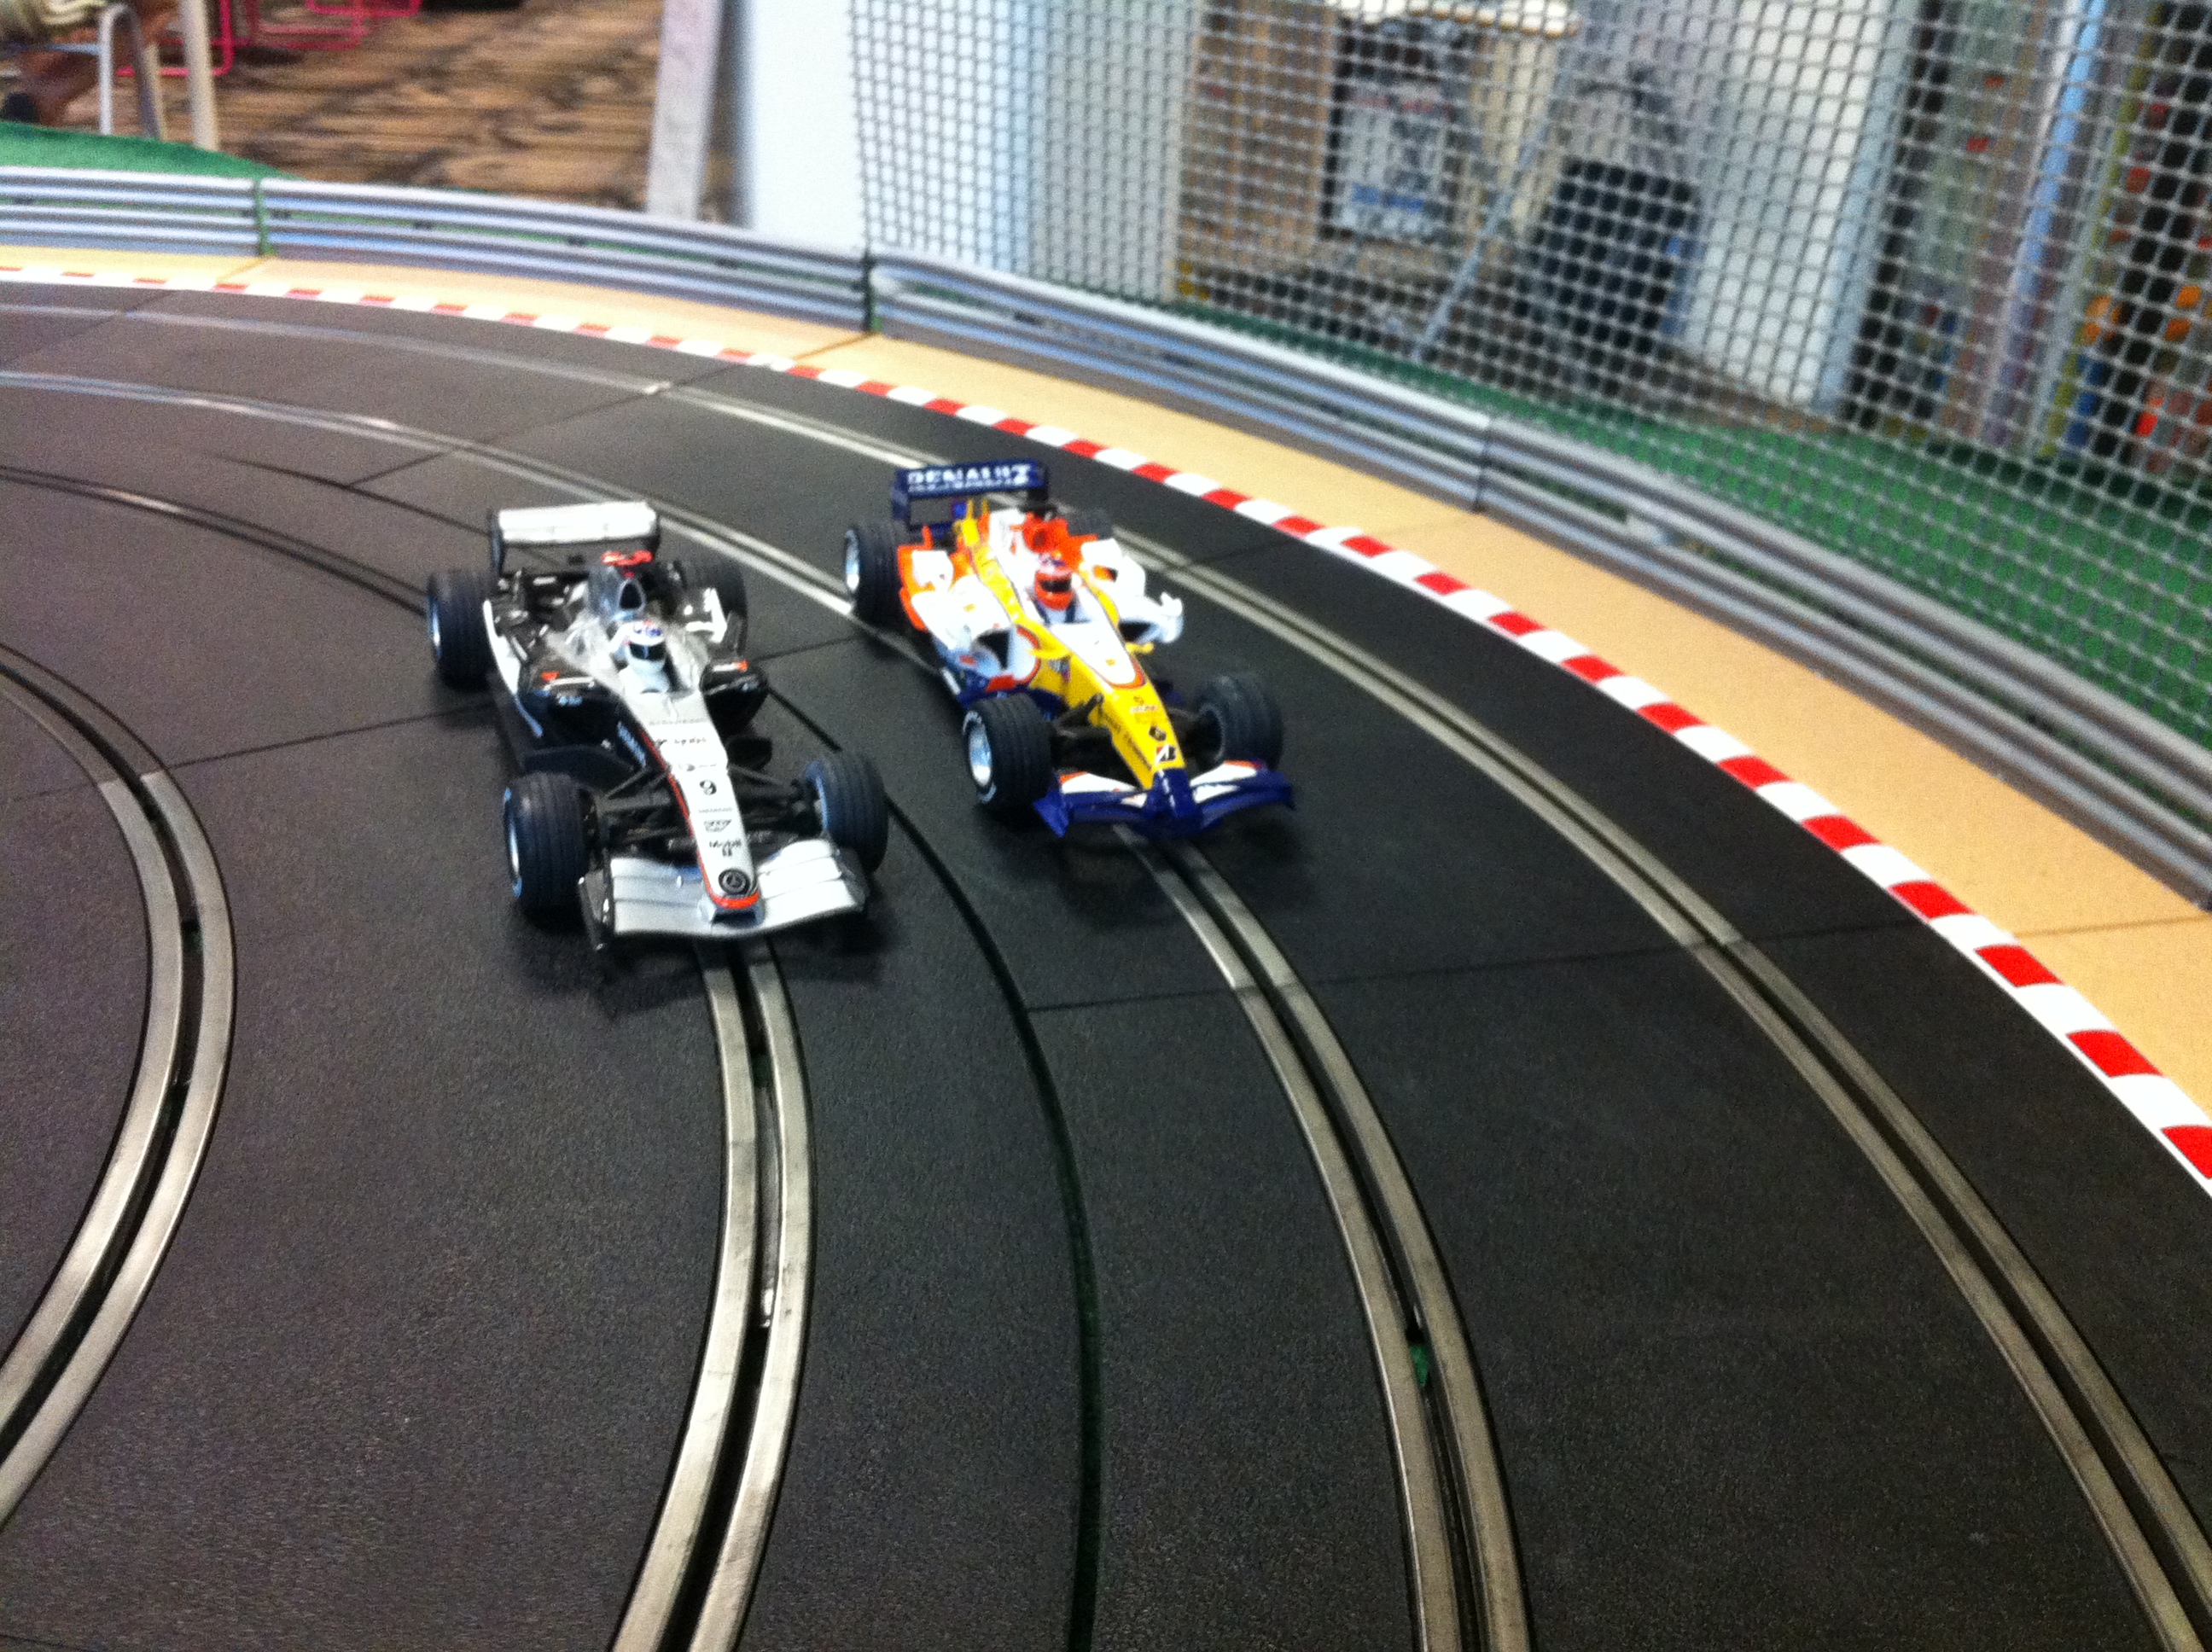 remote control race car track